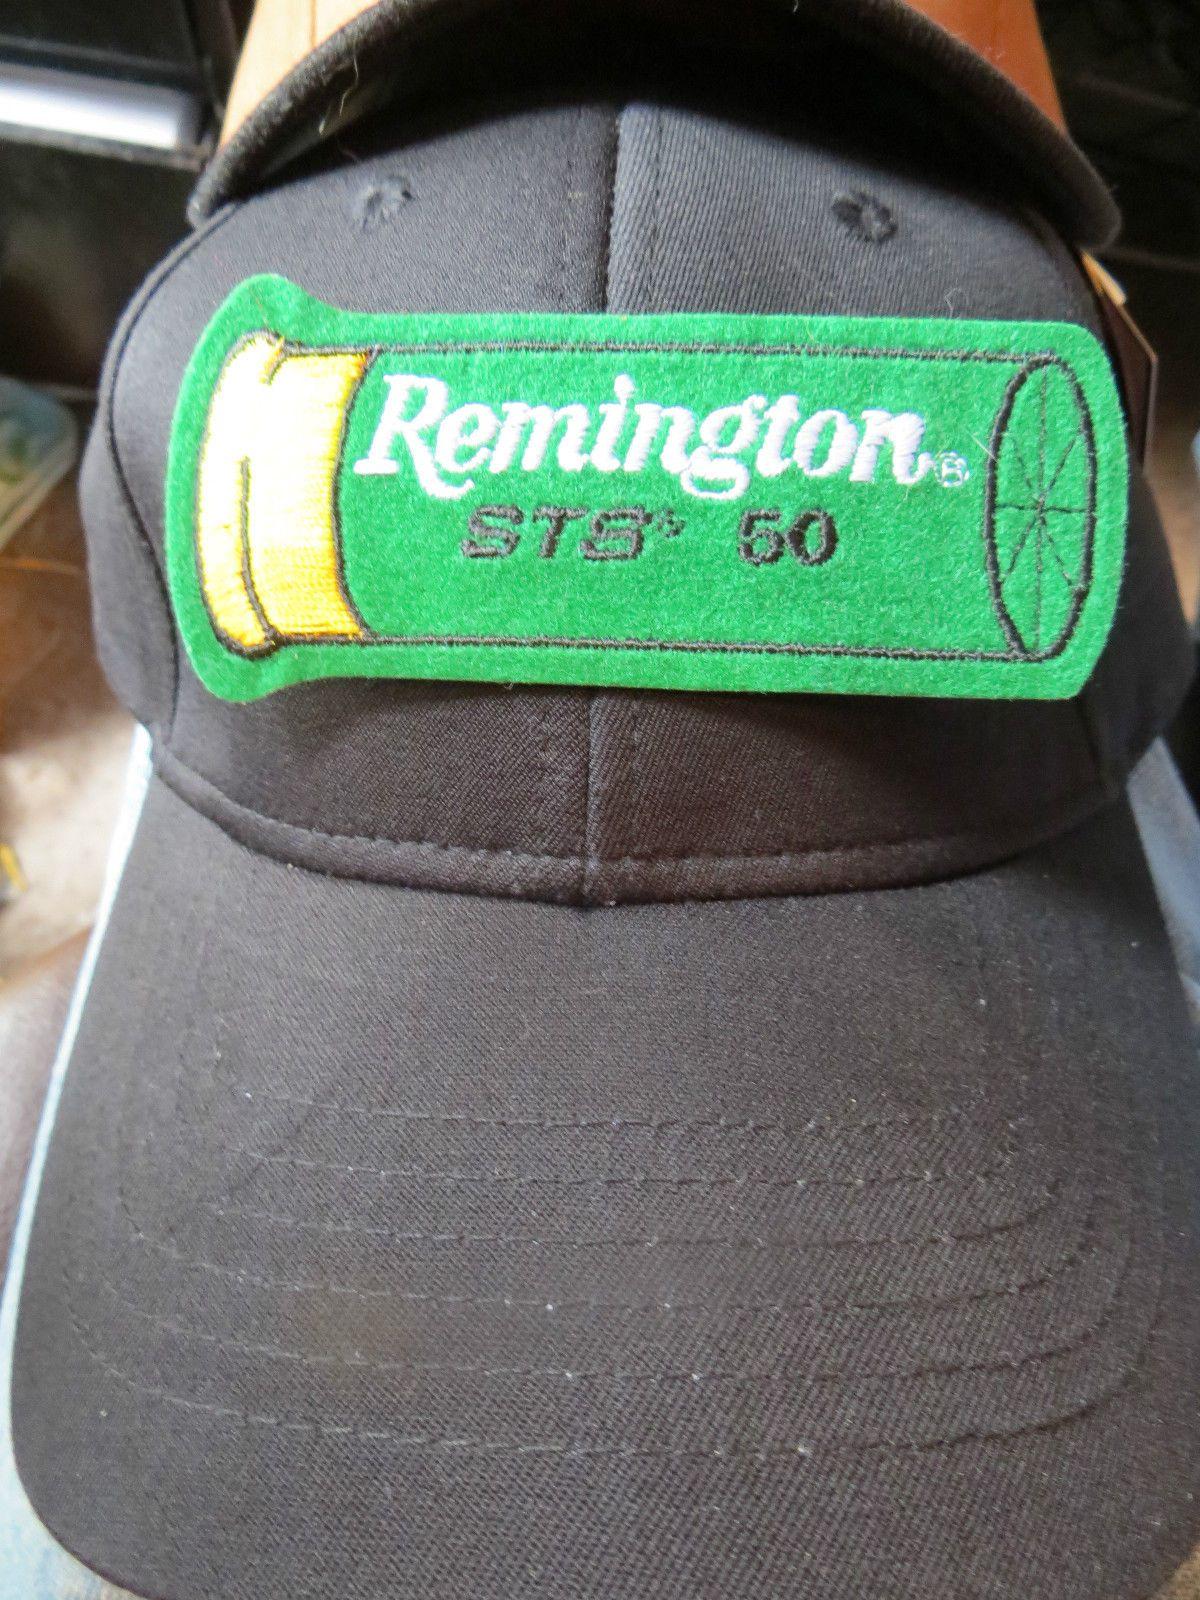 Remington Shotgun Shell Logo - REMINGTON STS 6O SHOTGUN SHELL SHAPE LOGO ADVERTISING PATCH ON